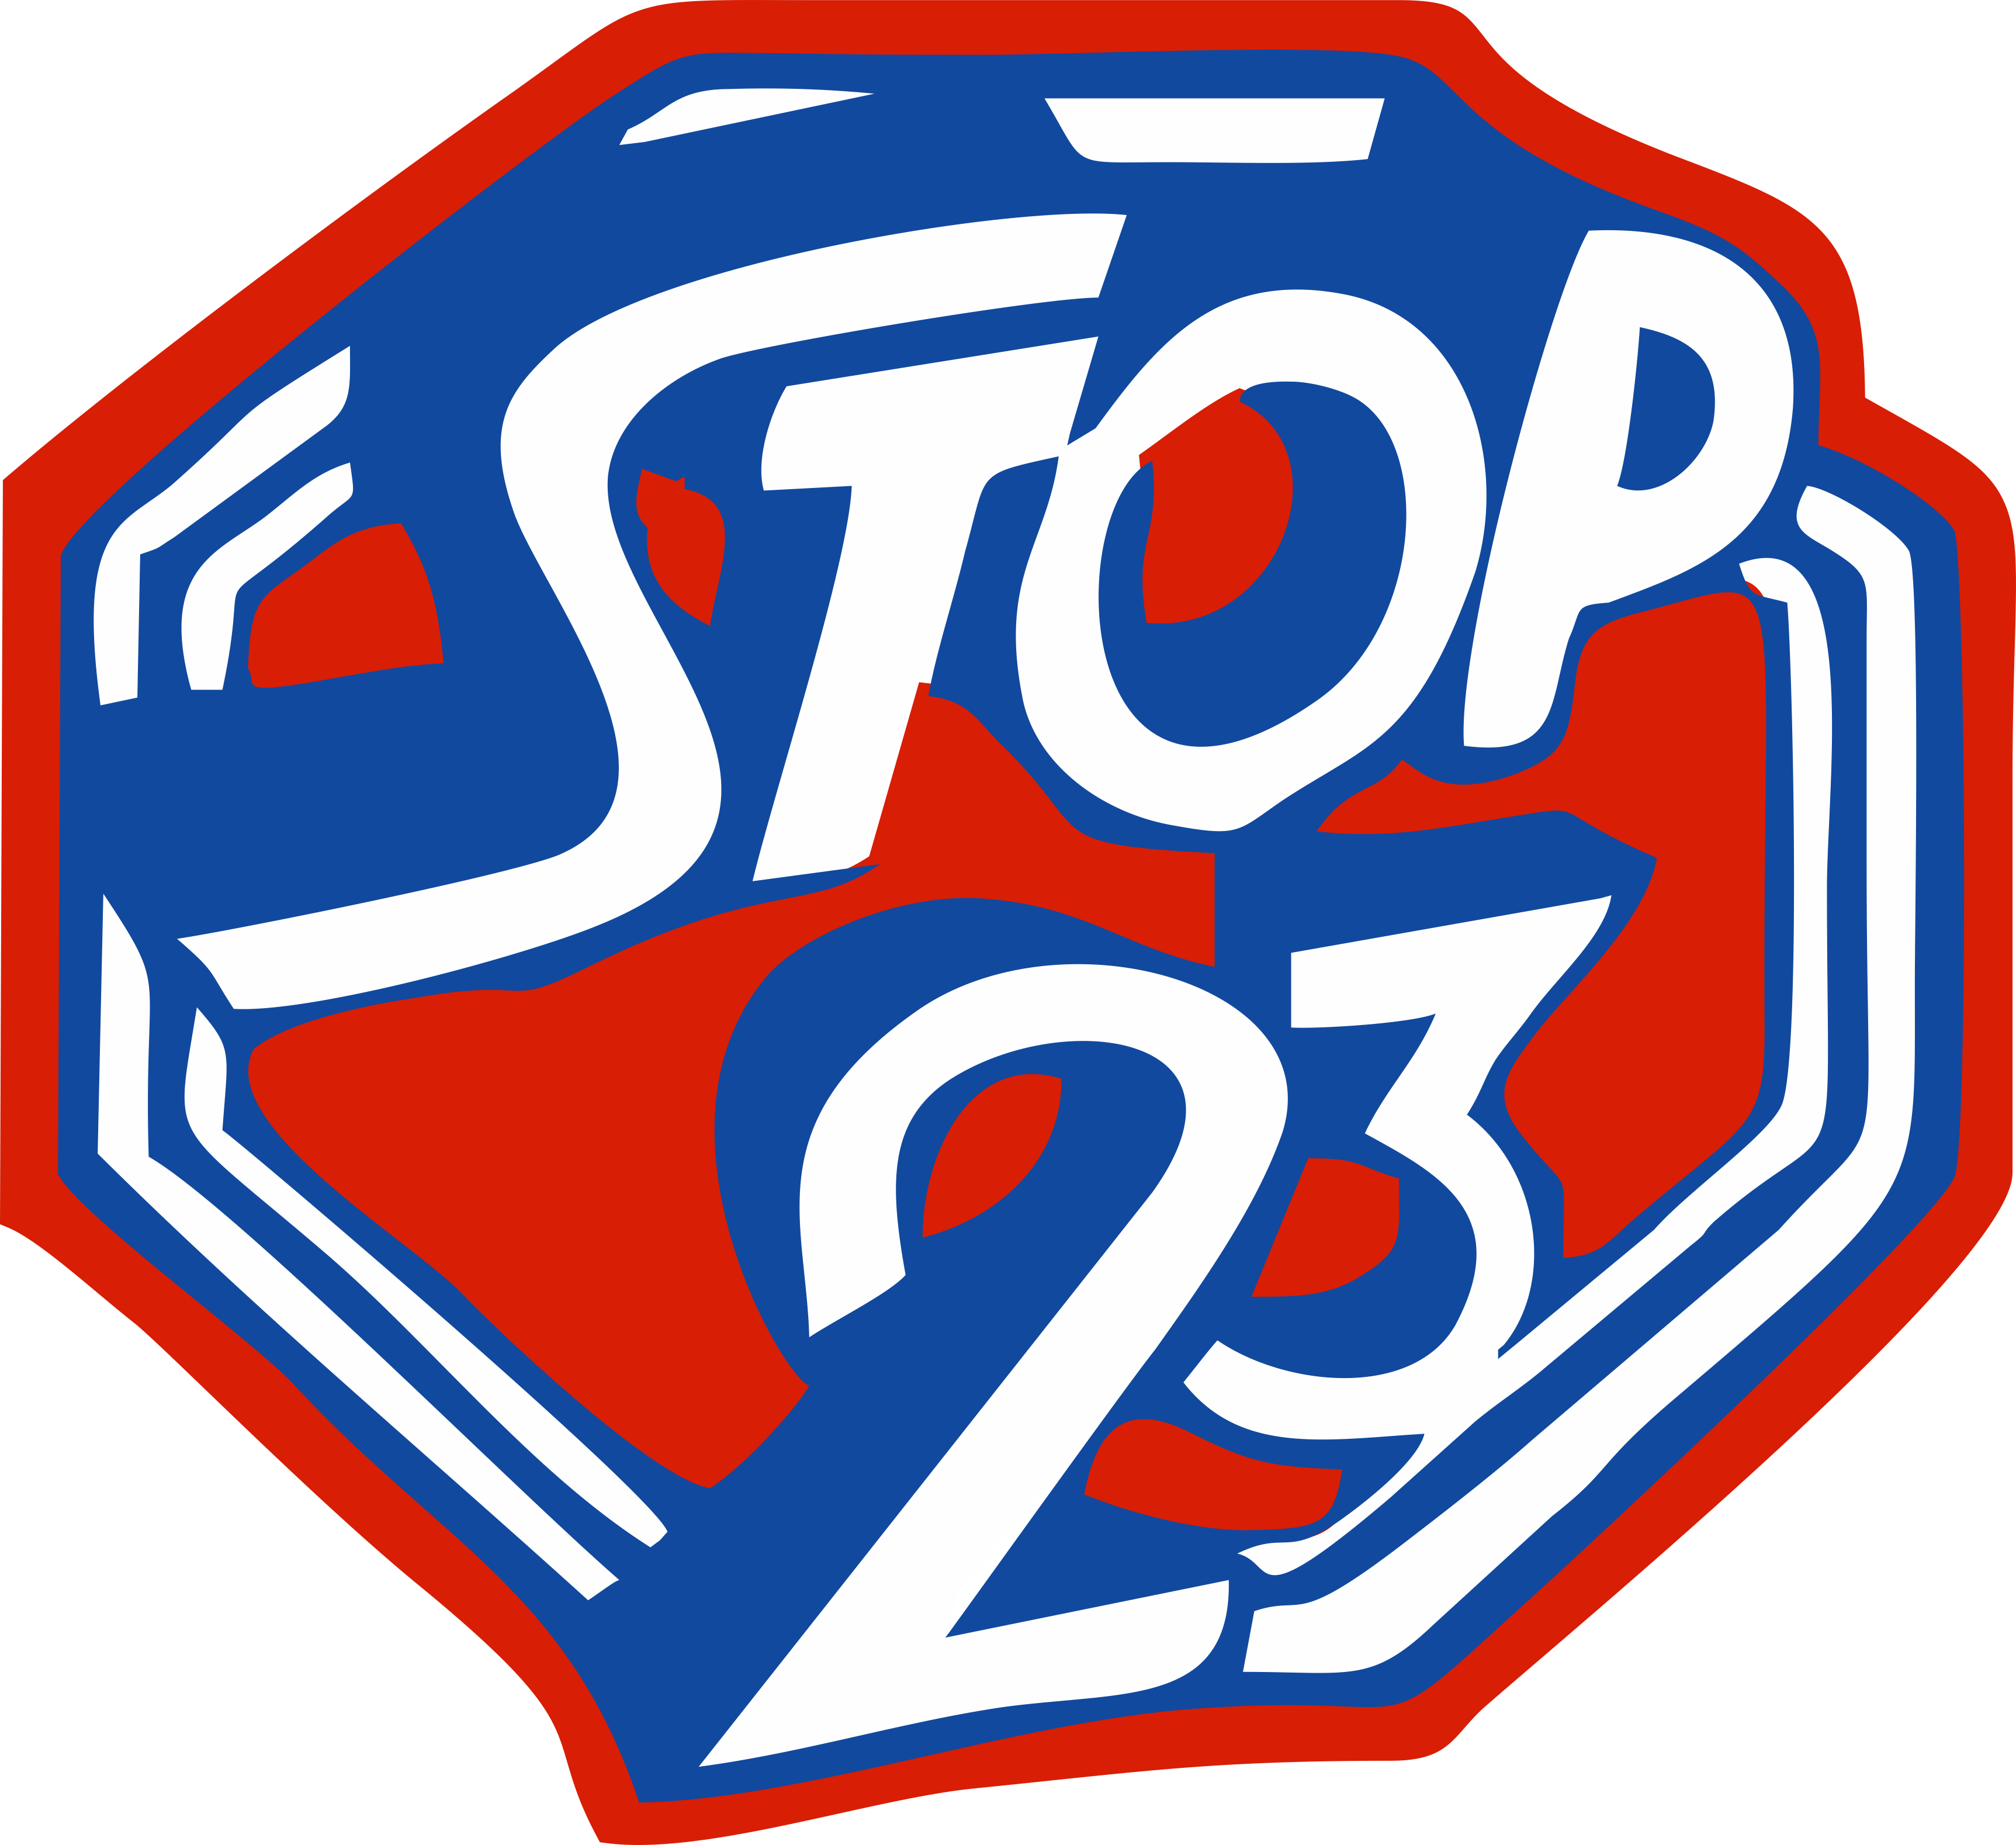 Stop 23 Men's T-Shirt